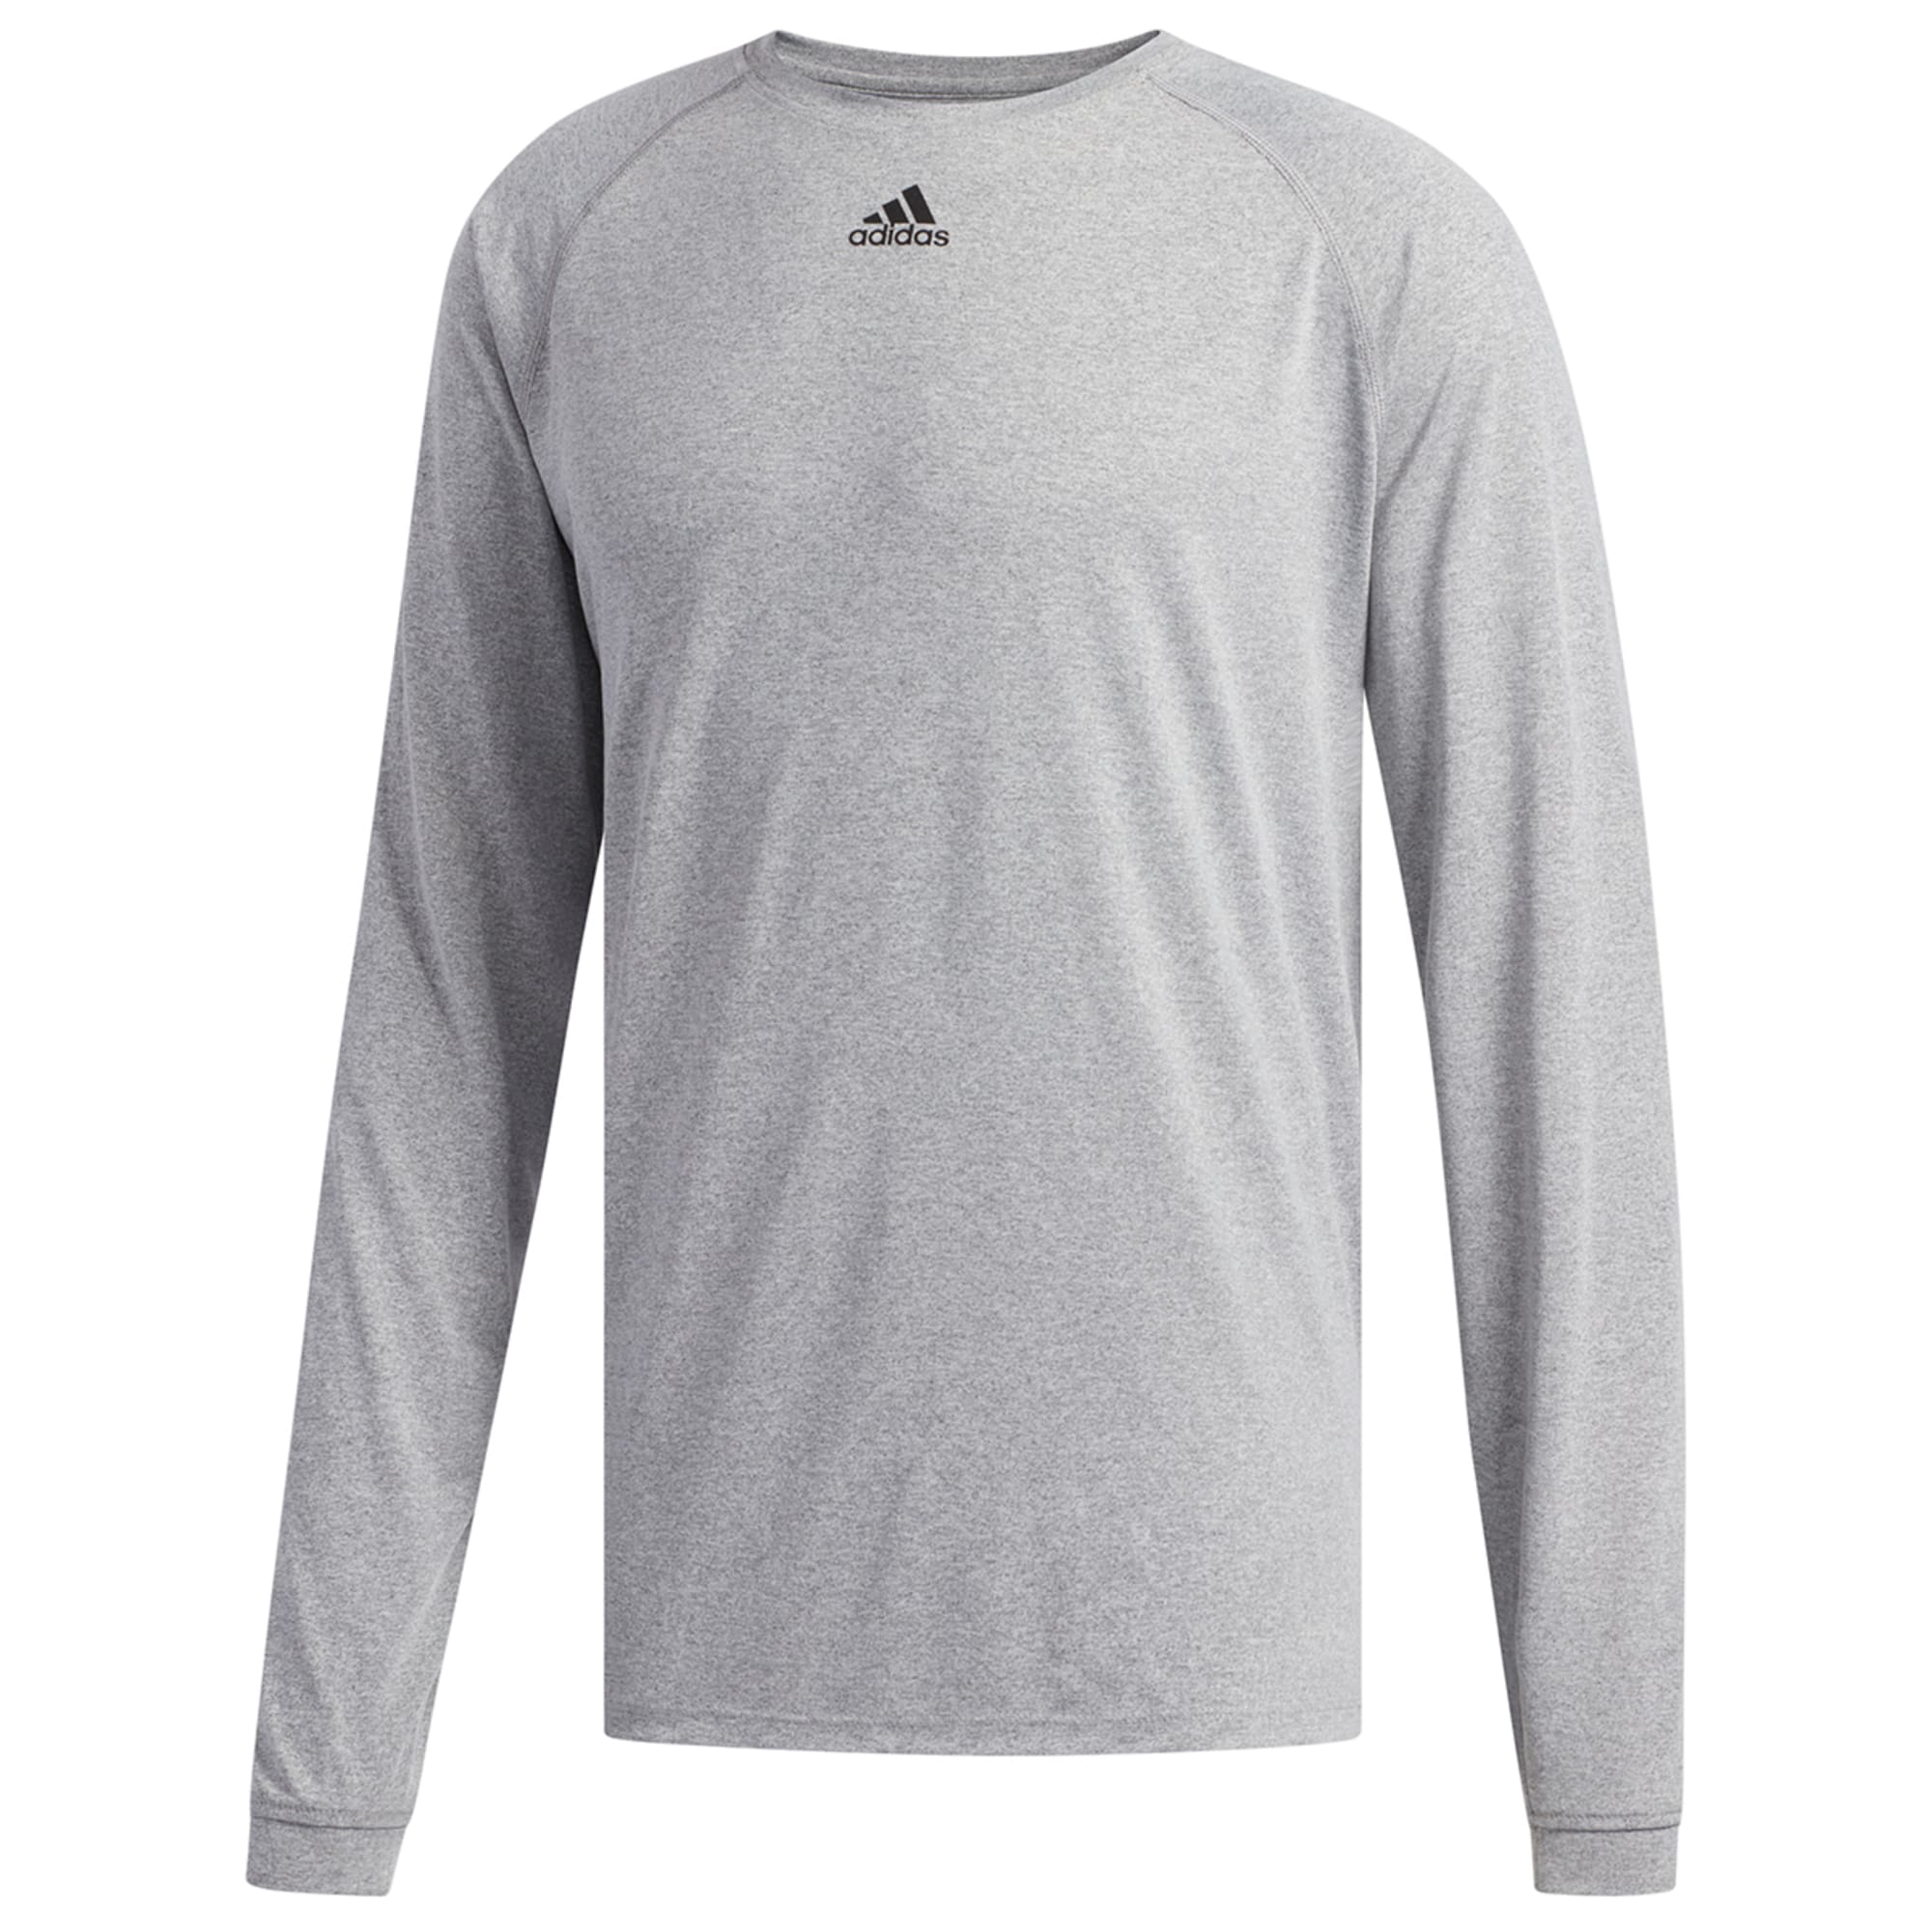 Adidas MENS CLIMALITE Training Ultimate Raglan Balck Grey Tee T Shirt SZ L  Large